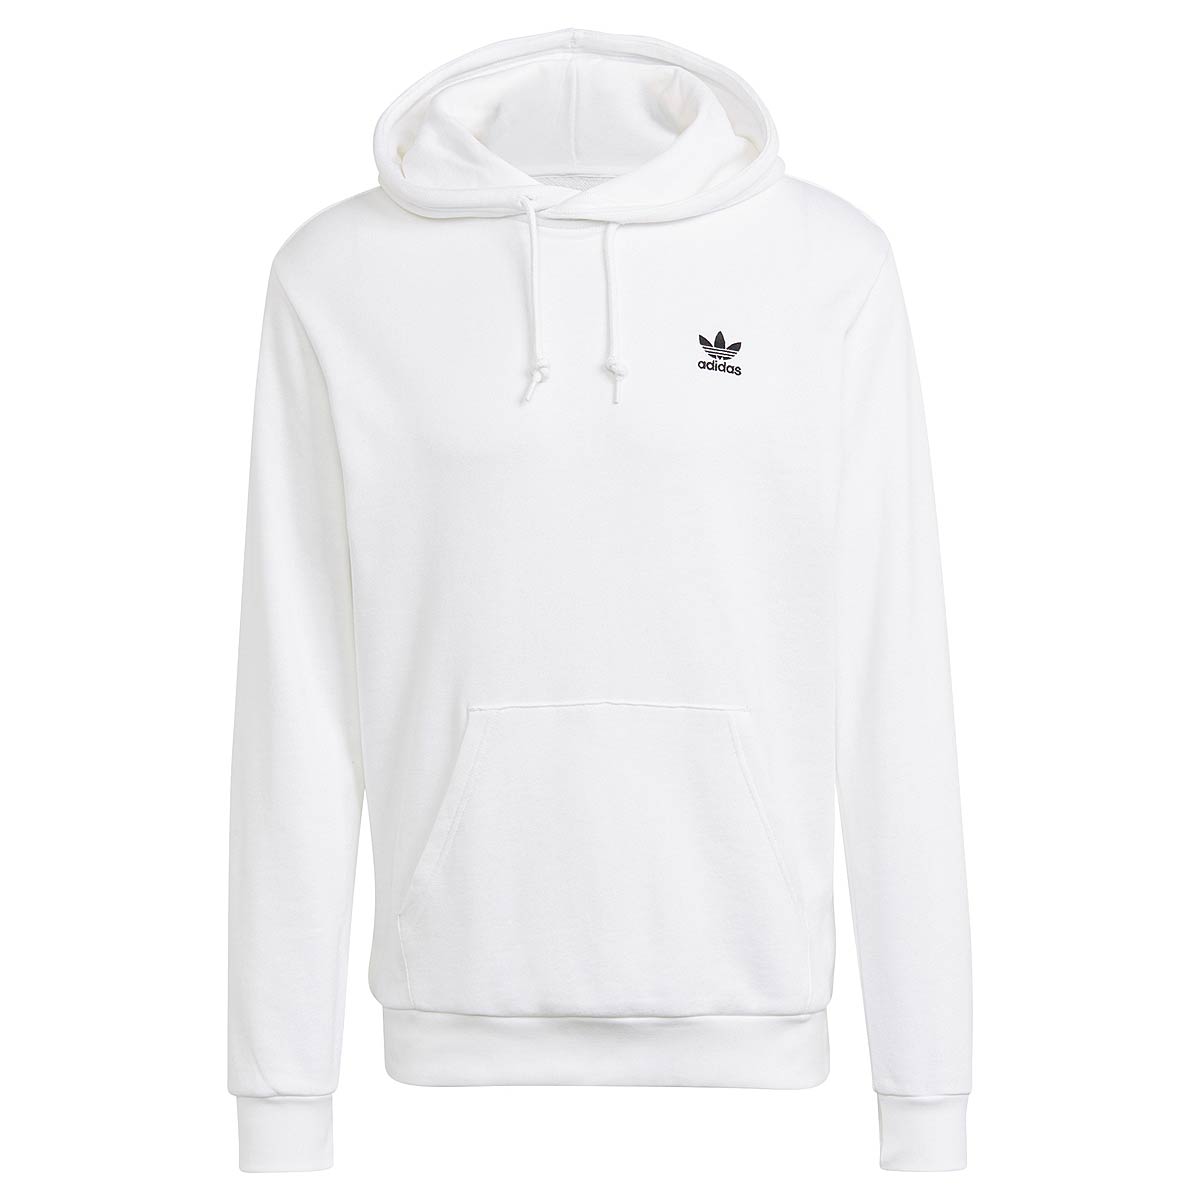 Image of Adidas Essential Hoody, White/black